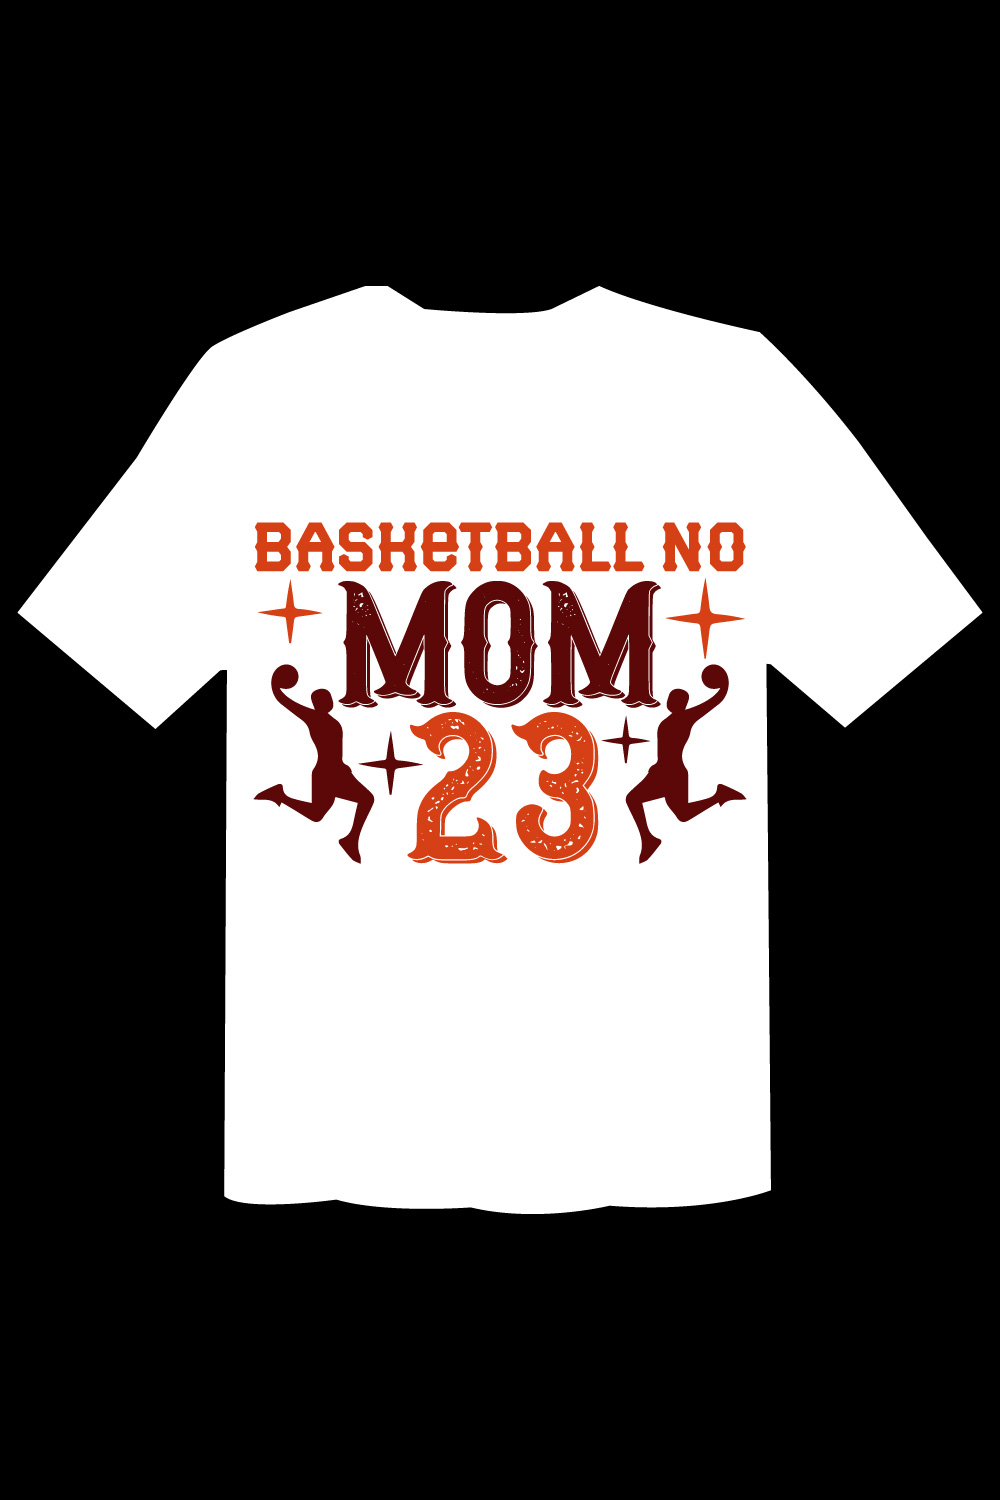 Basketball No Mom 23 T Shirt Cut File Design pinterest preview image.